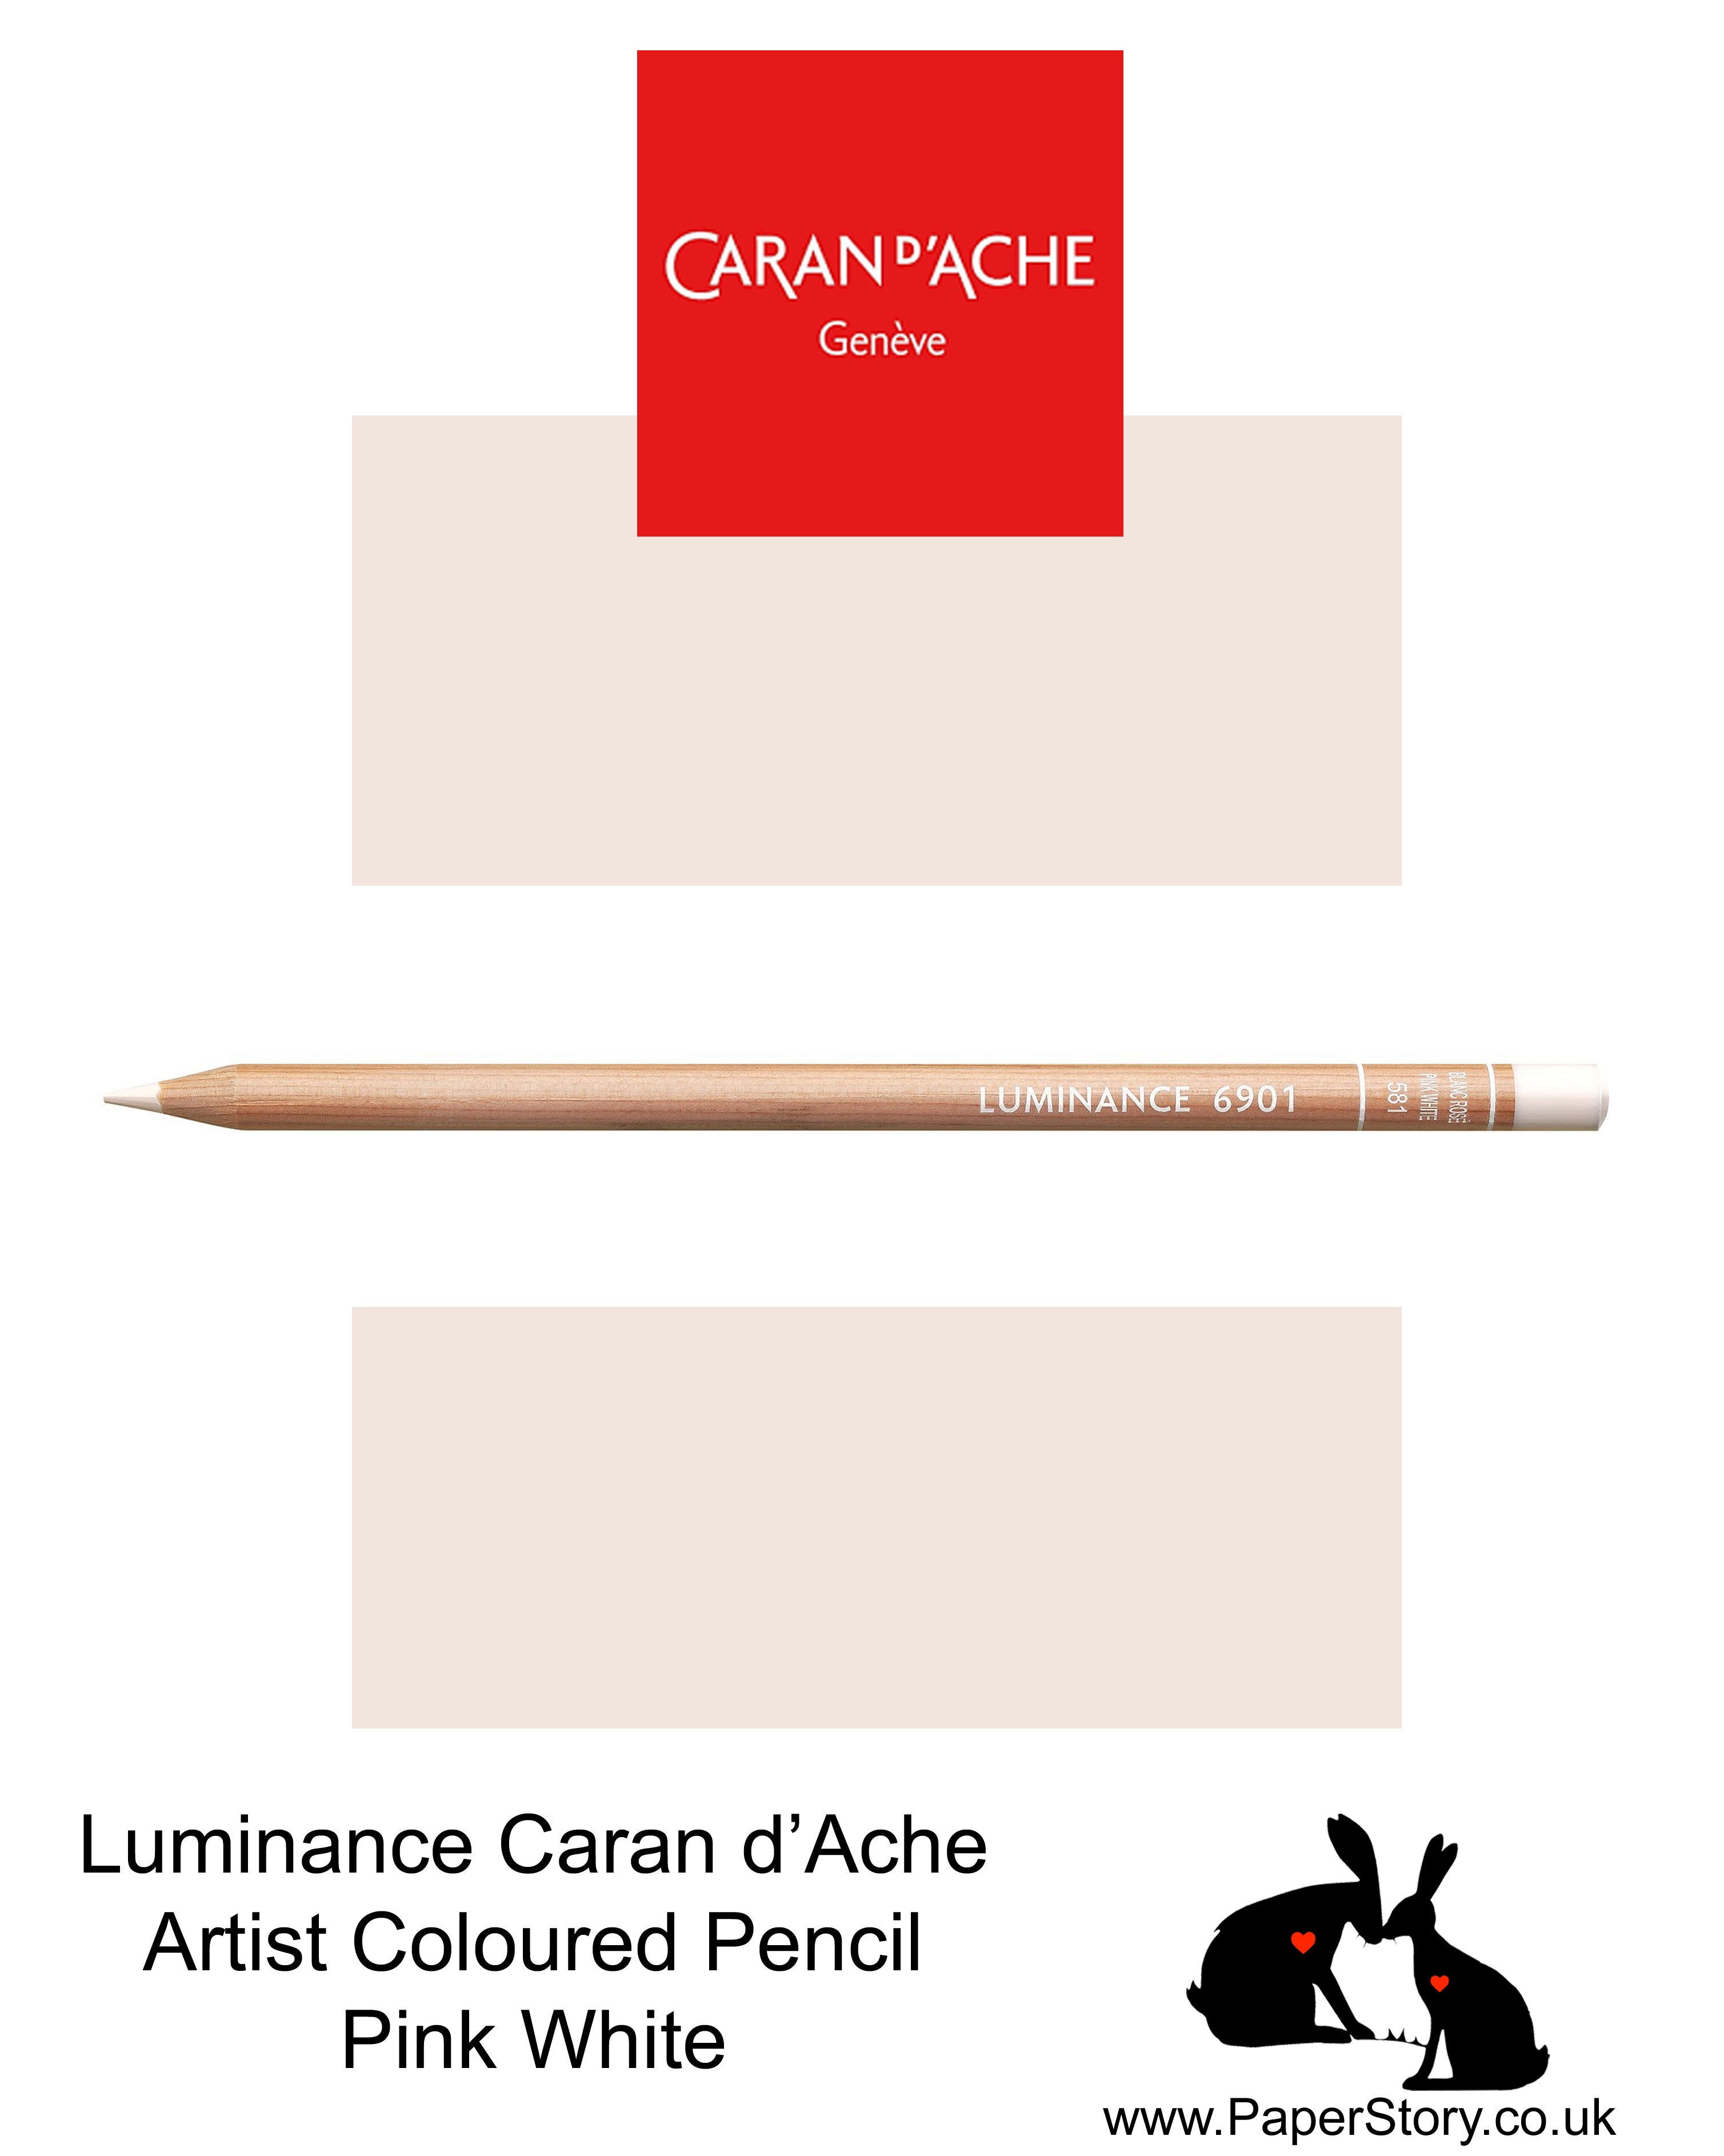 NEW Caran d'Ache Luminance individual Artist Colour Pencils 6901 Pink White 581